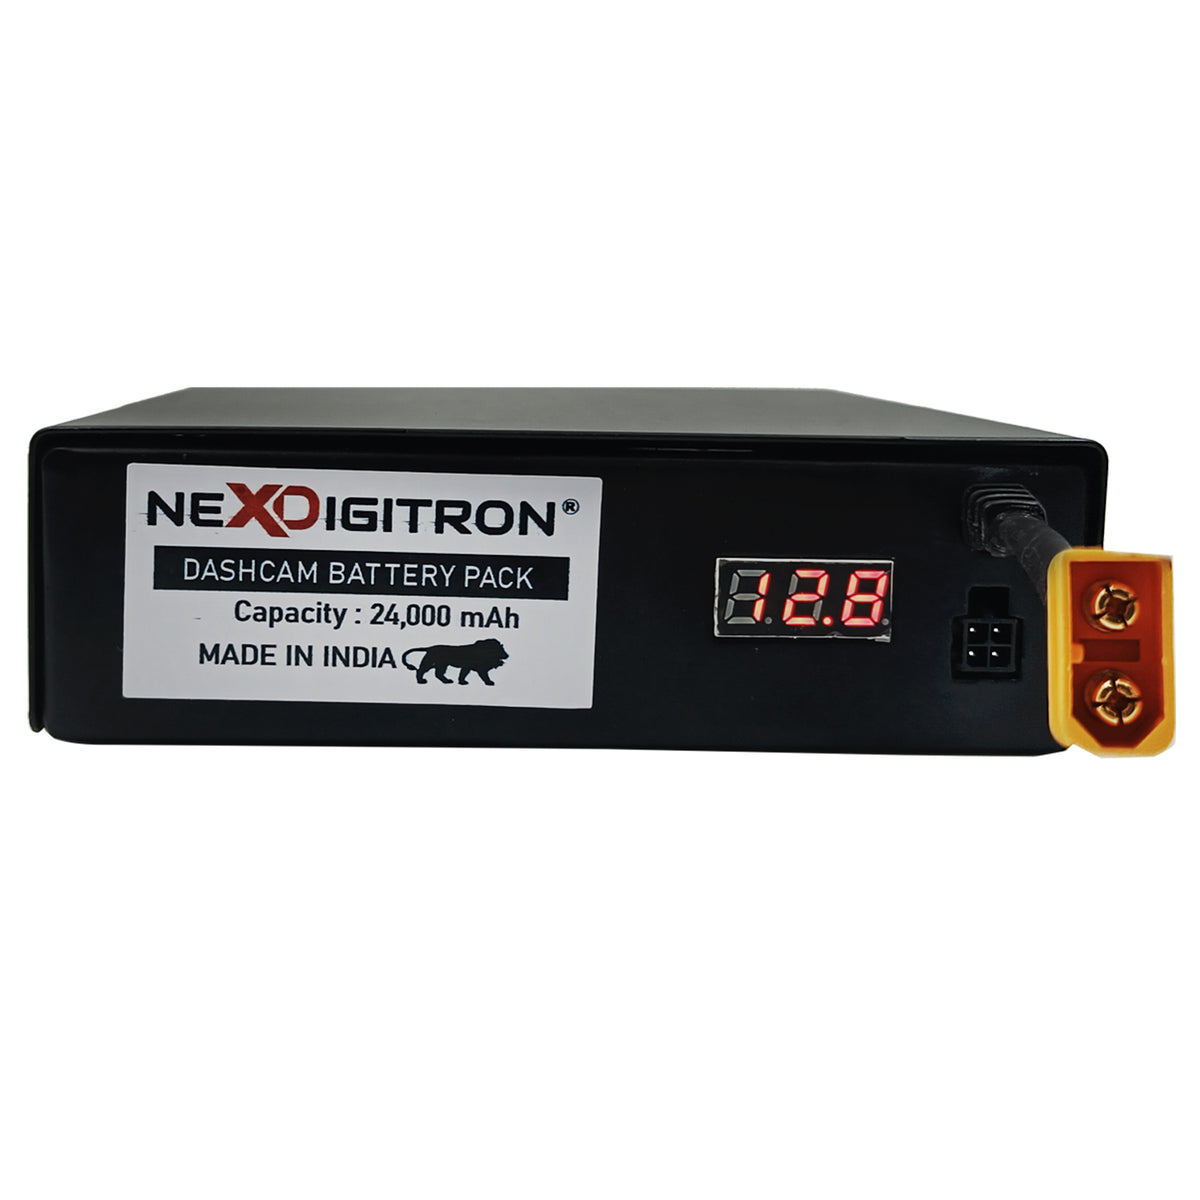 DashCam Battery Pack for DDPAI DashCams (Type-C) - 24,000 mAH – NEXDIGITRON®